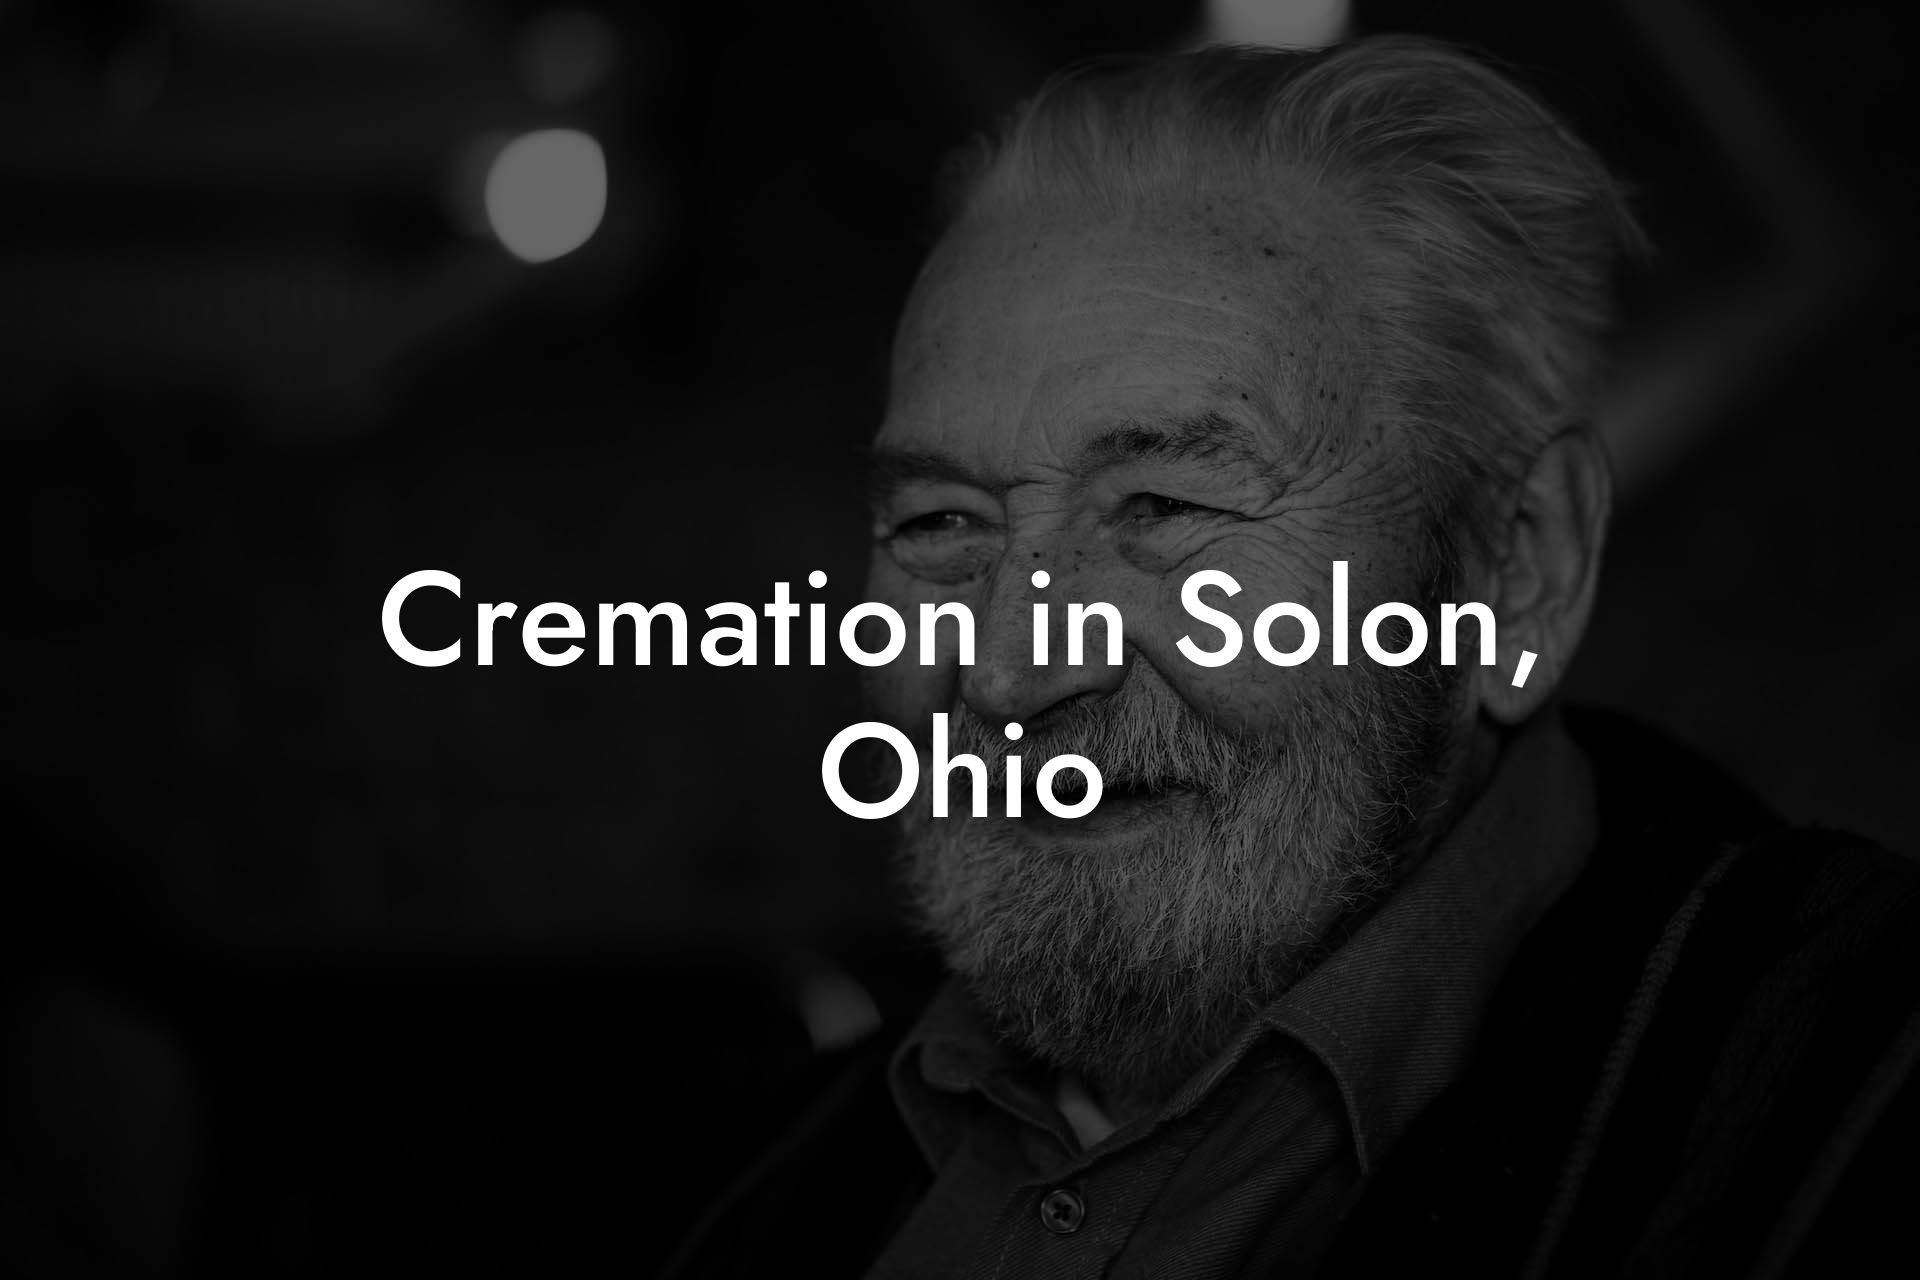 Cremation in Solon, Ohio